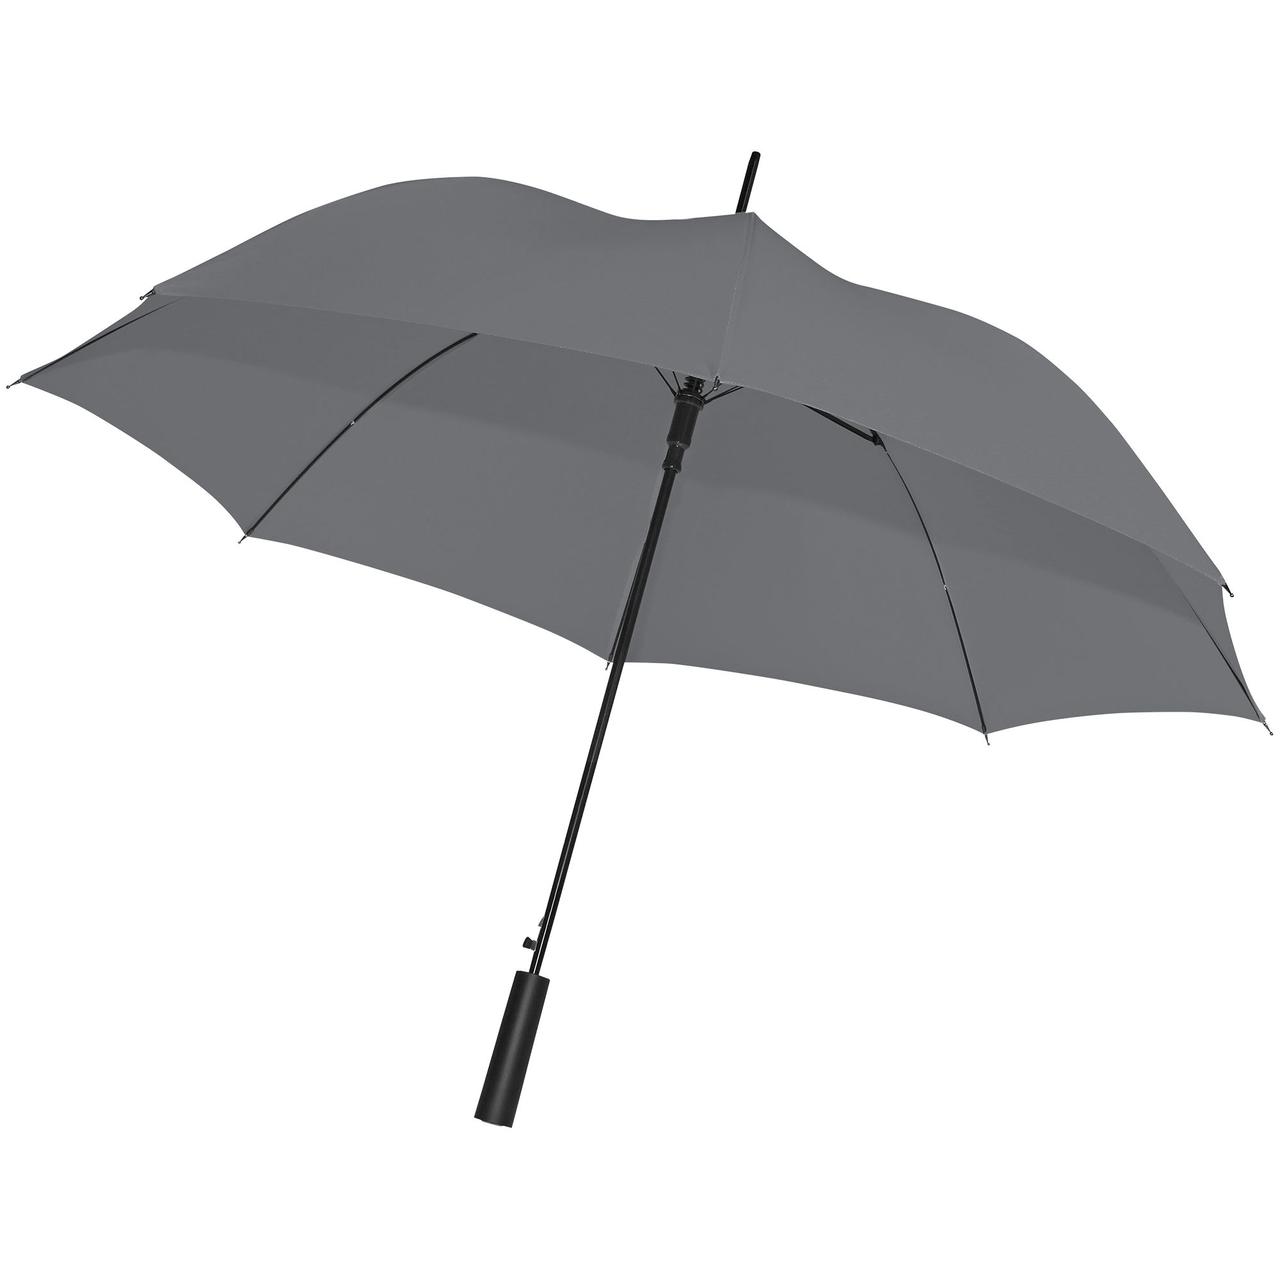 Зонт-трость Dublin, серый (артикул 11845.11), фото 1